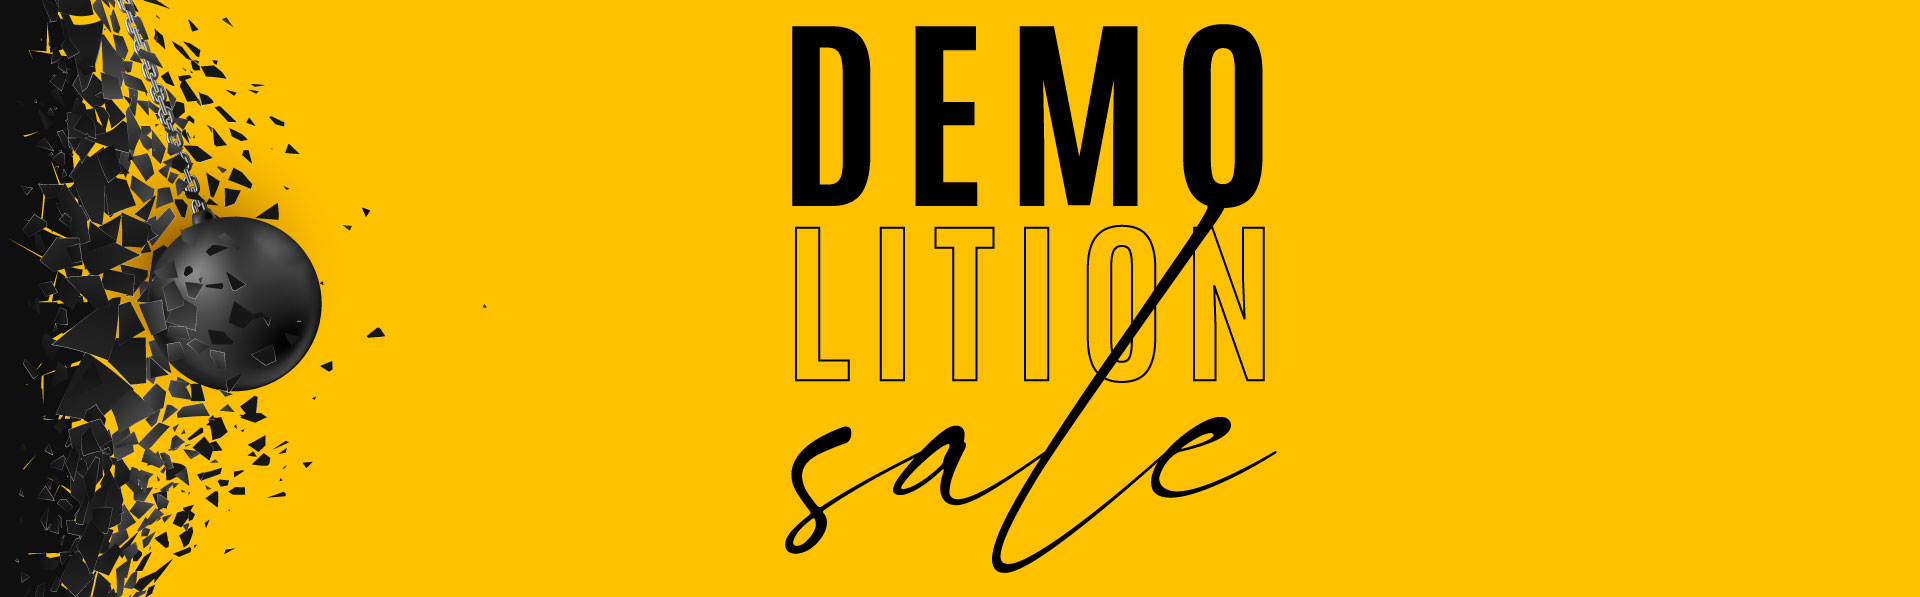 demolition-sale